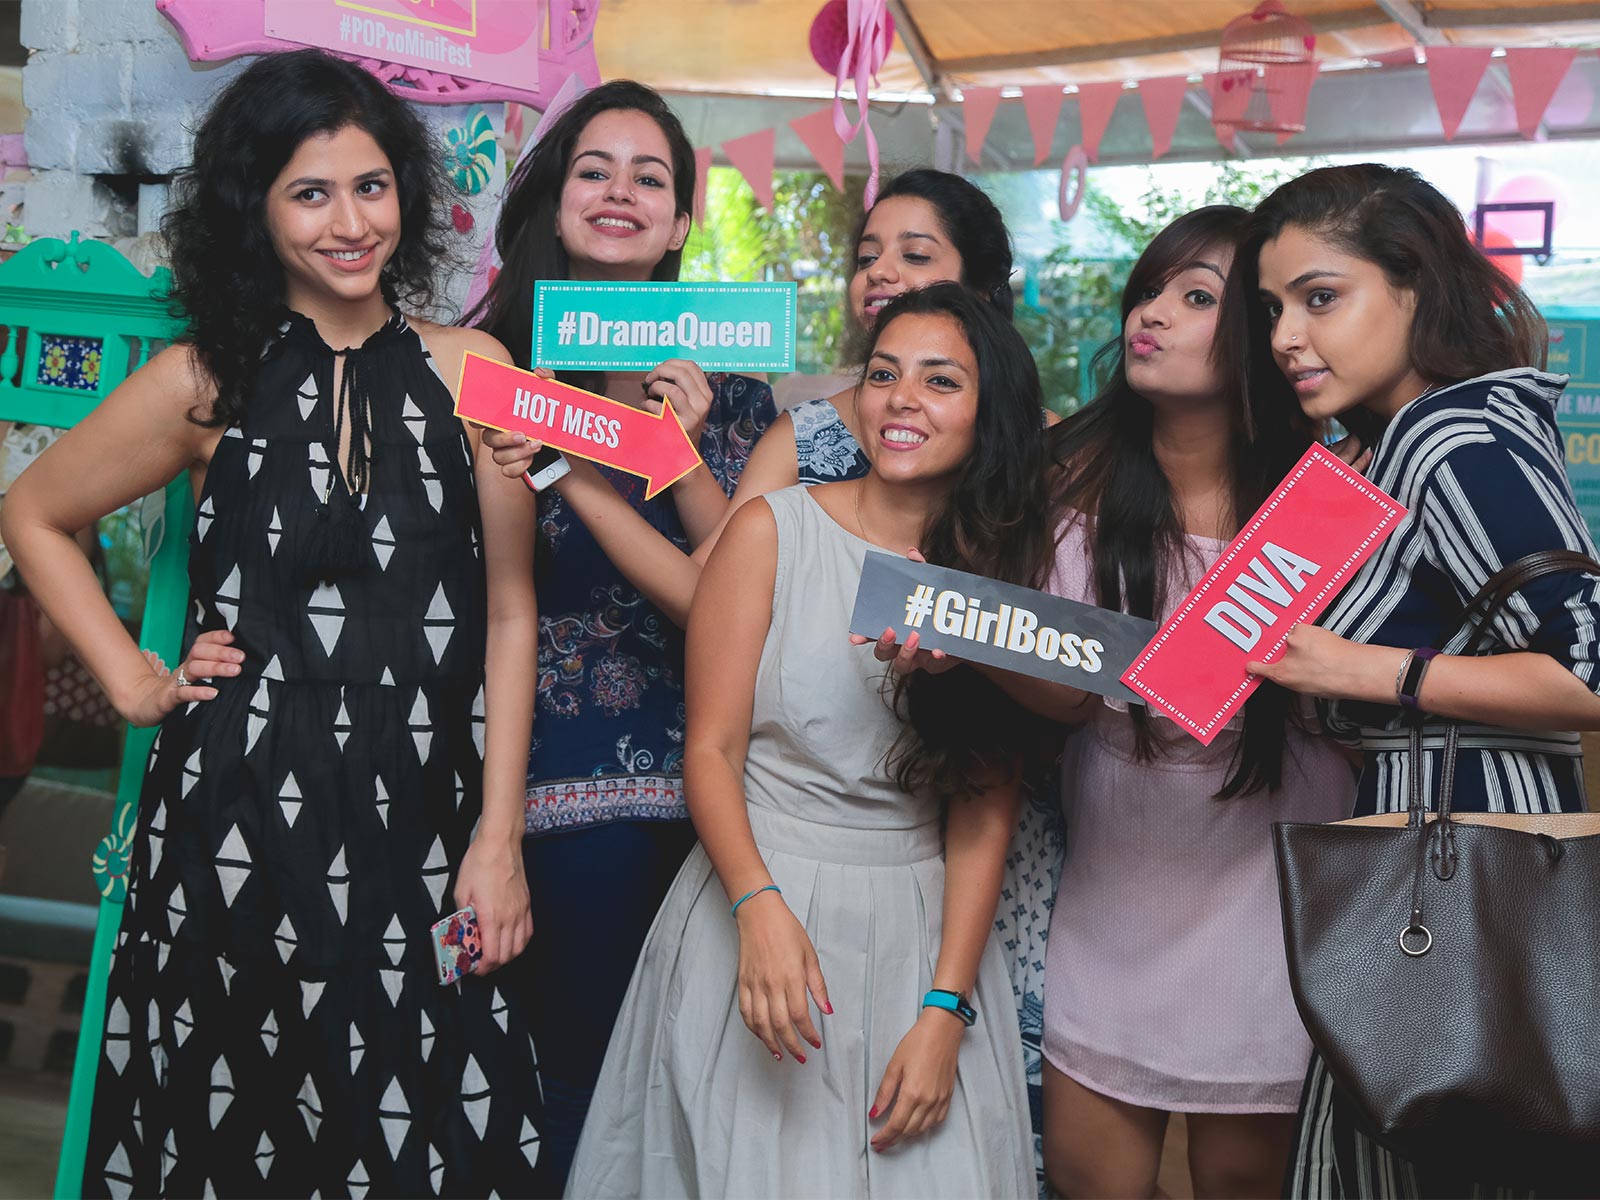 From L-to-R Roshni, Dakshee, Snigdha Choudhary, Anushree Sharma, Krithika Kumar and Gayatri Chhetry at the POPxo Mini Fest held at Tabula Rasa in Delhi.